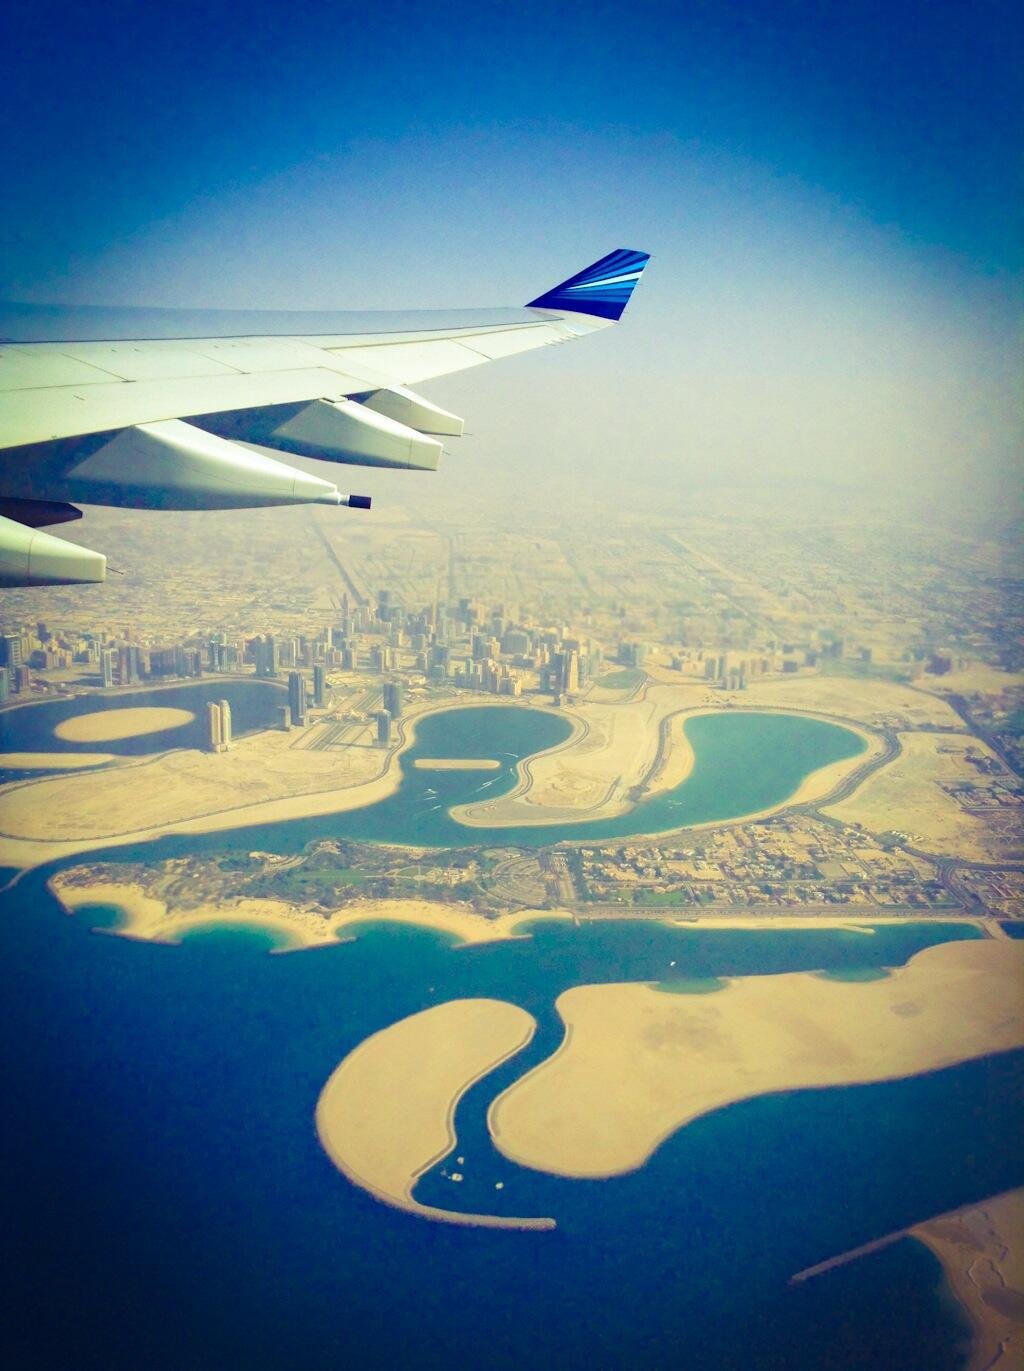 Авиарейсы в дубай. Вид из иллюминатора самолета на Дубай. Вид Дубаи из самолета Гольфстрим 700. Флай Дубай самолеты. Дубай в иллюминаторе.